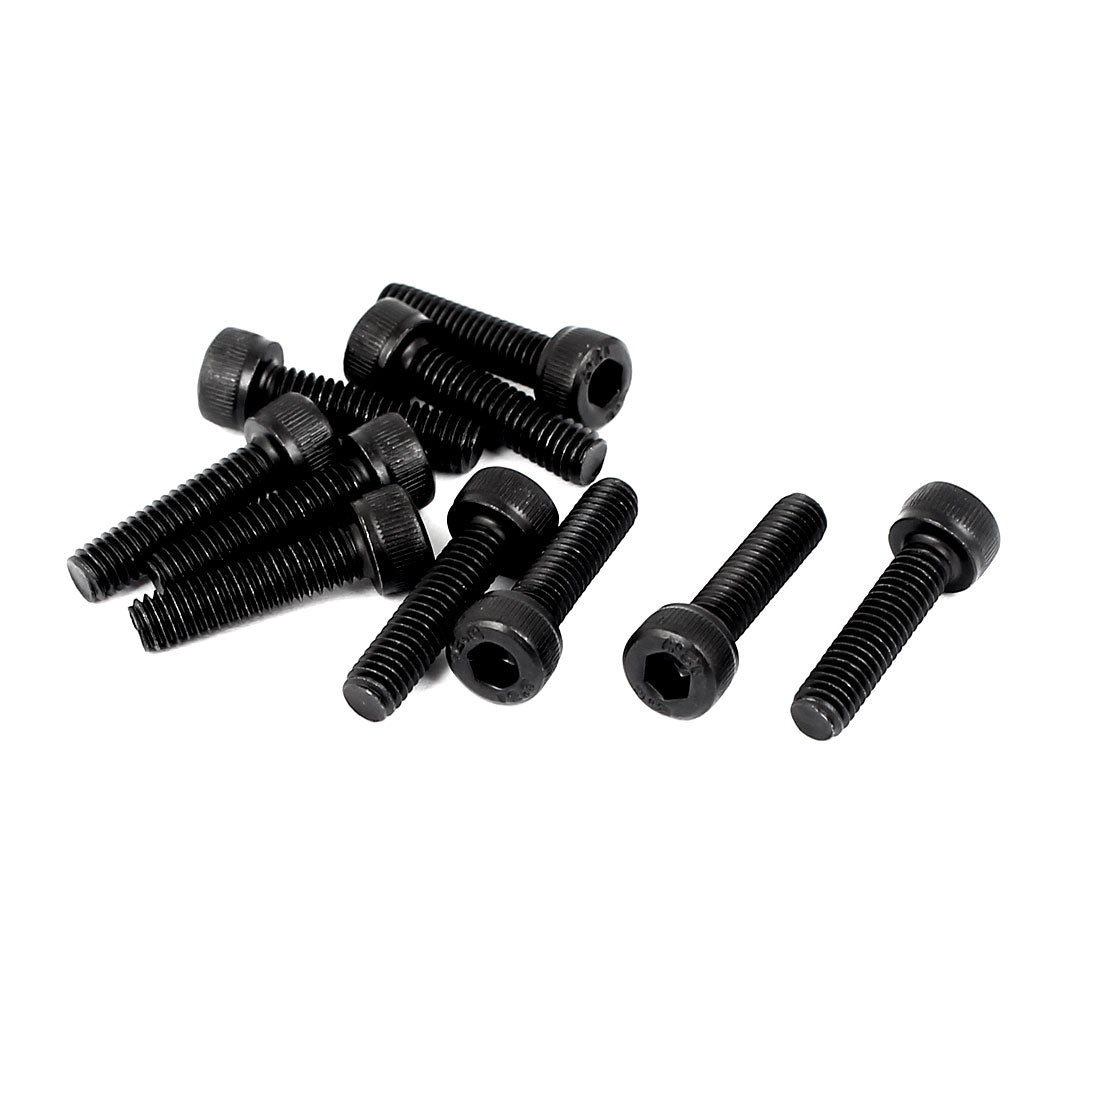 Uxcell Uxcell M3x16mm 12.9 Alloy Steel Screw Cap Point Hex Socket Screws Bolts Black 50Pcs